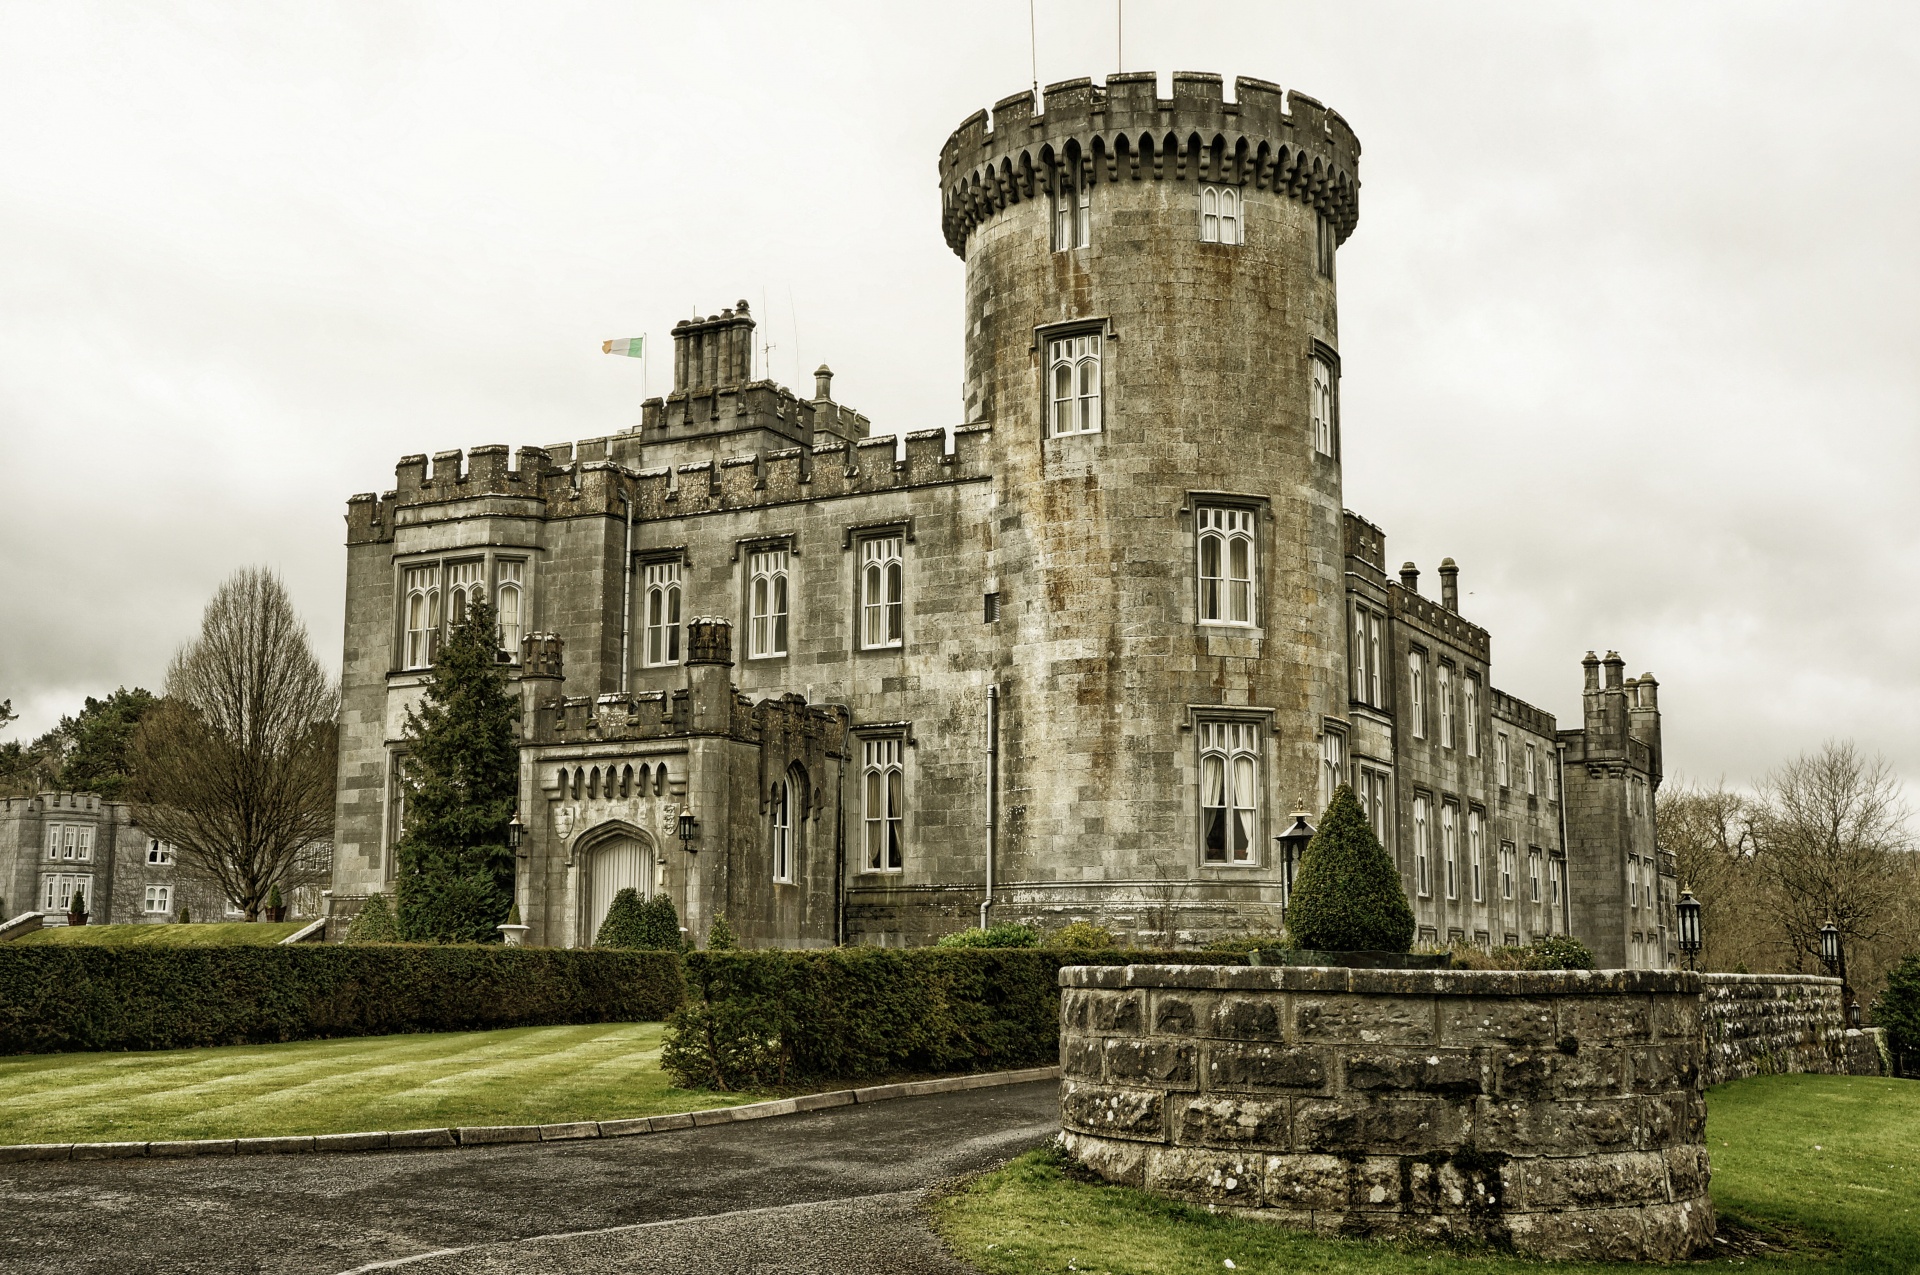 Dromoland Castle in County Clare, Ireland.